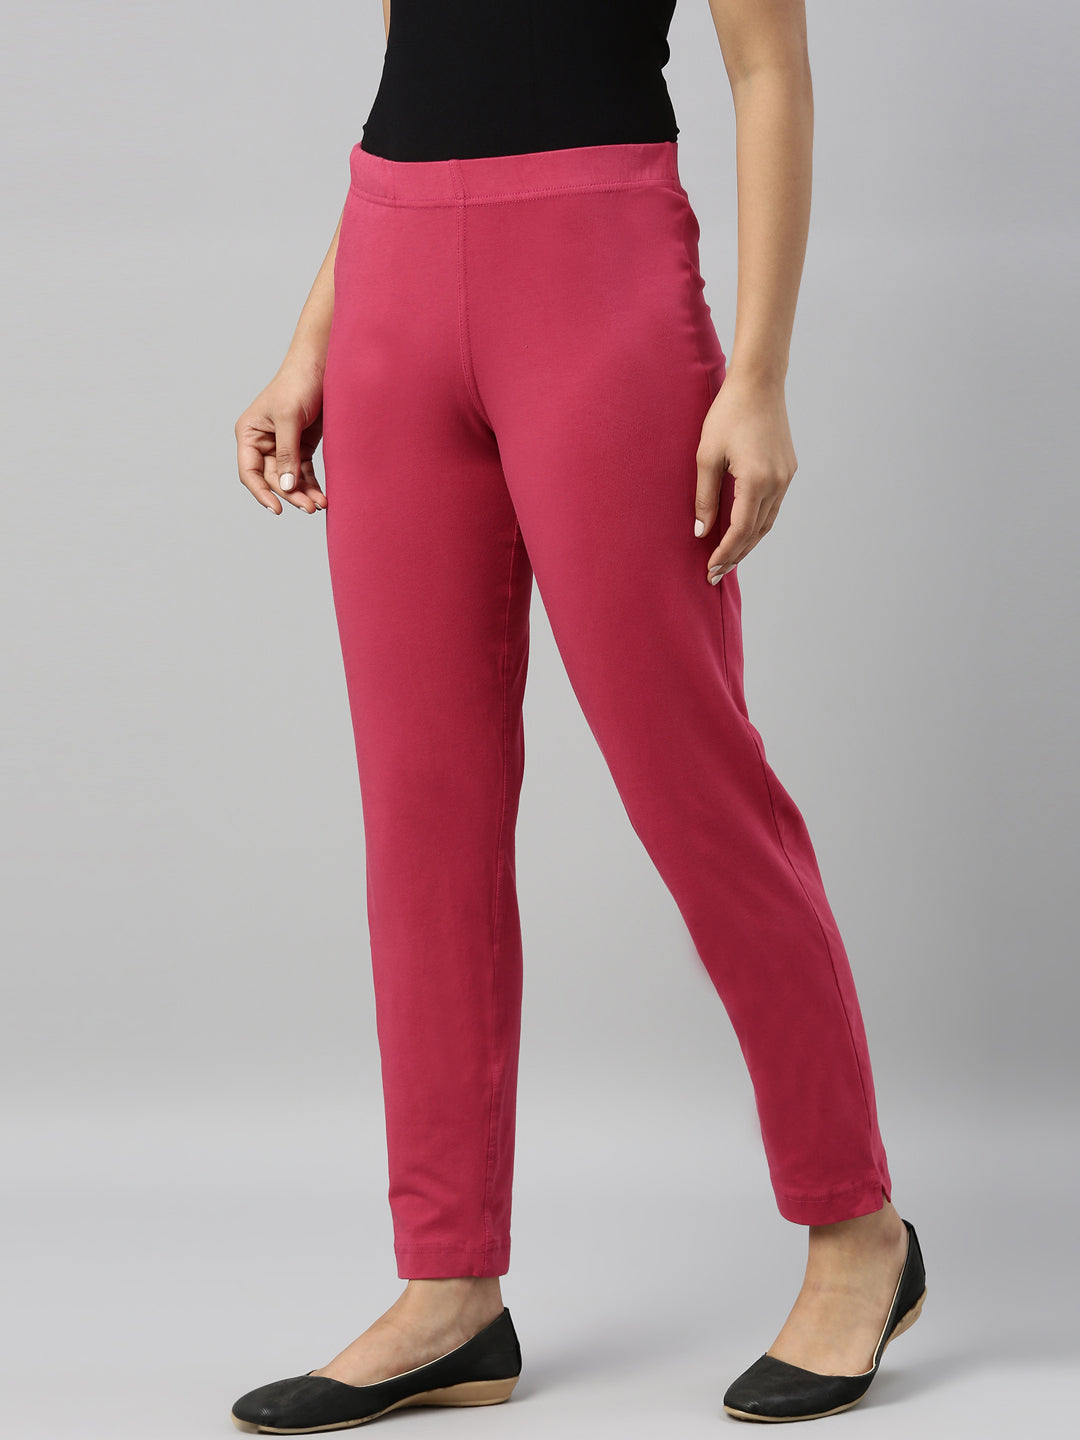 Go Colors Plain Ladies Pink Cotton Blend Pant at Rs 599/piece in Mumbai